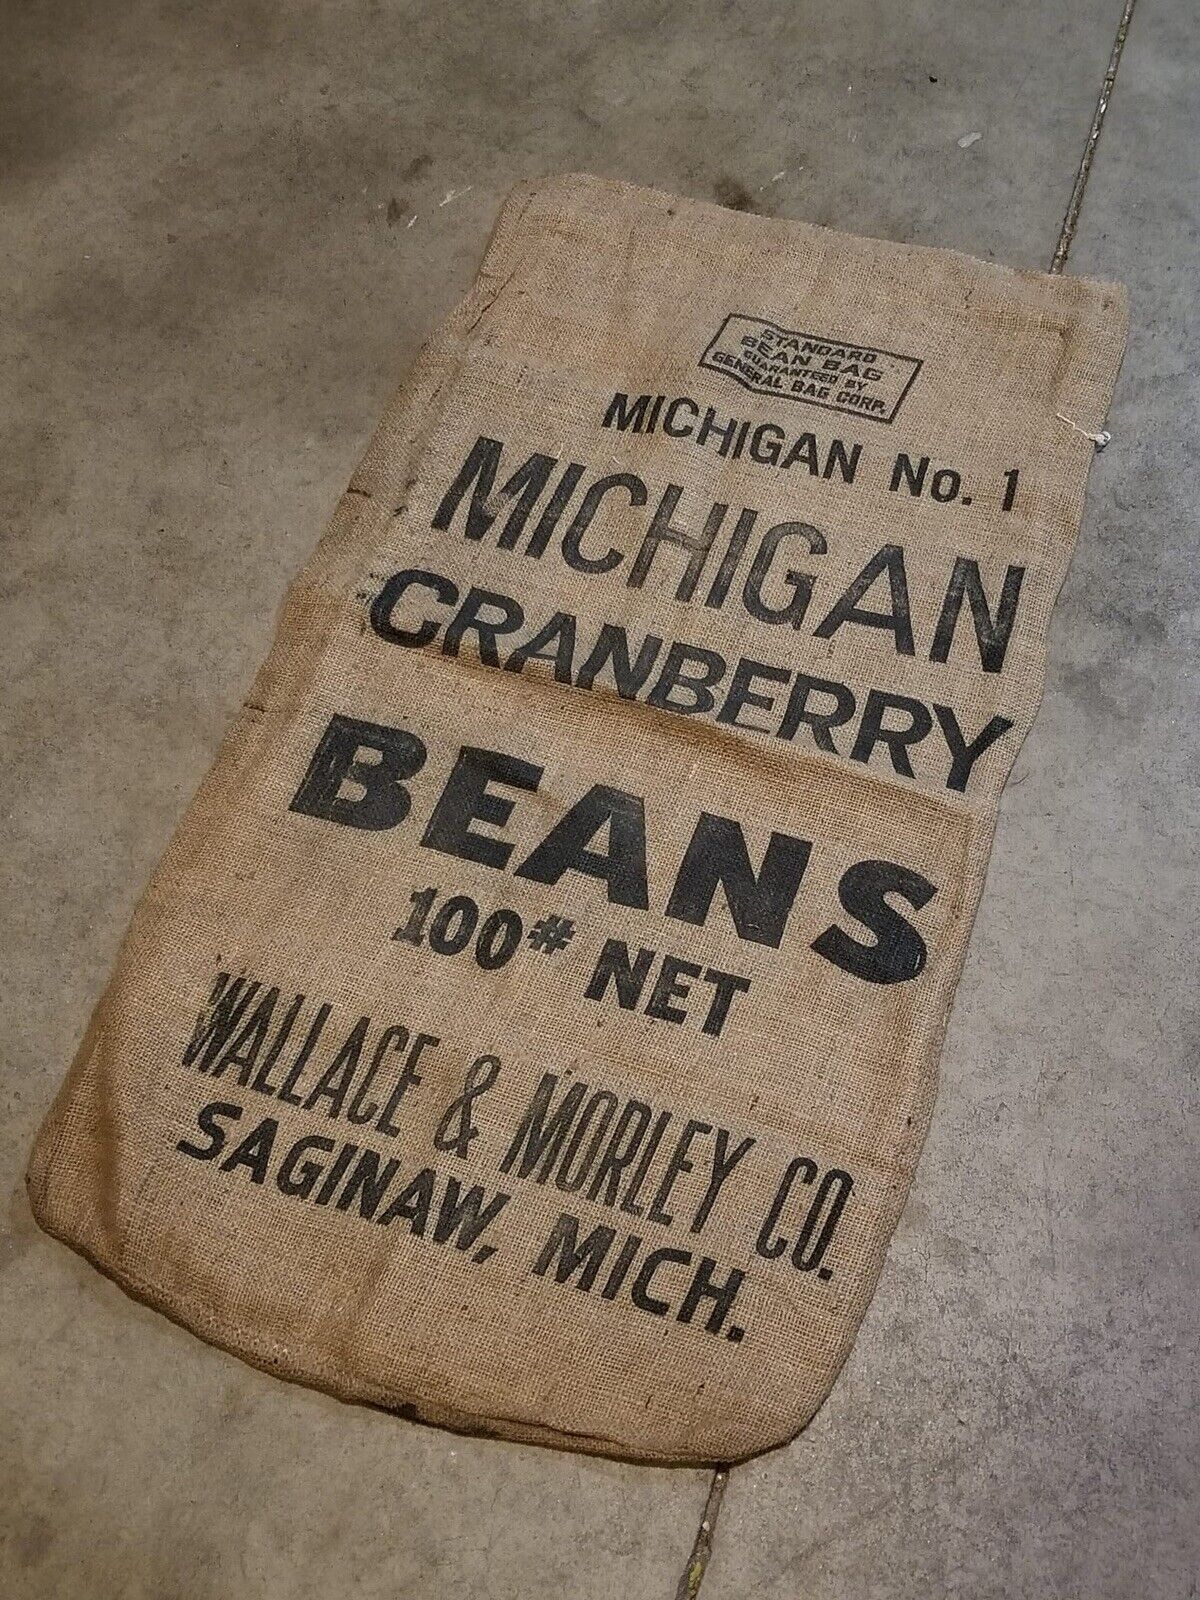 Vintage Michigan Cranberry Bean Burlap Sack - Wallace & Morley Co. Decor - TreasuTiques